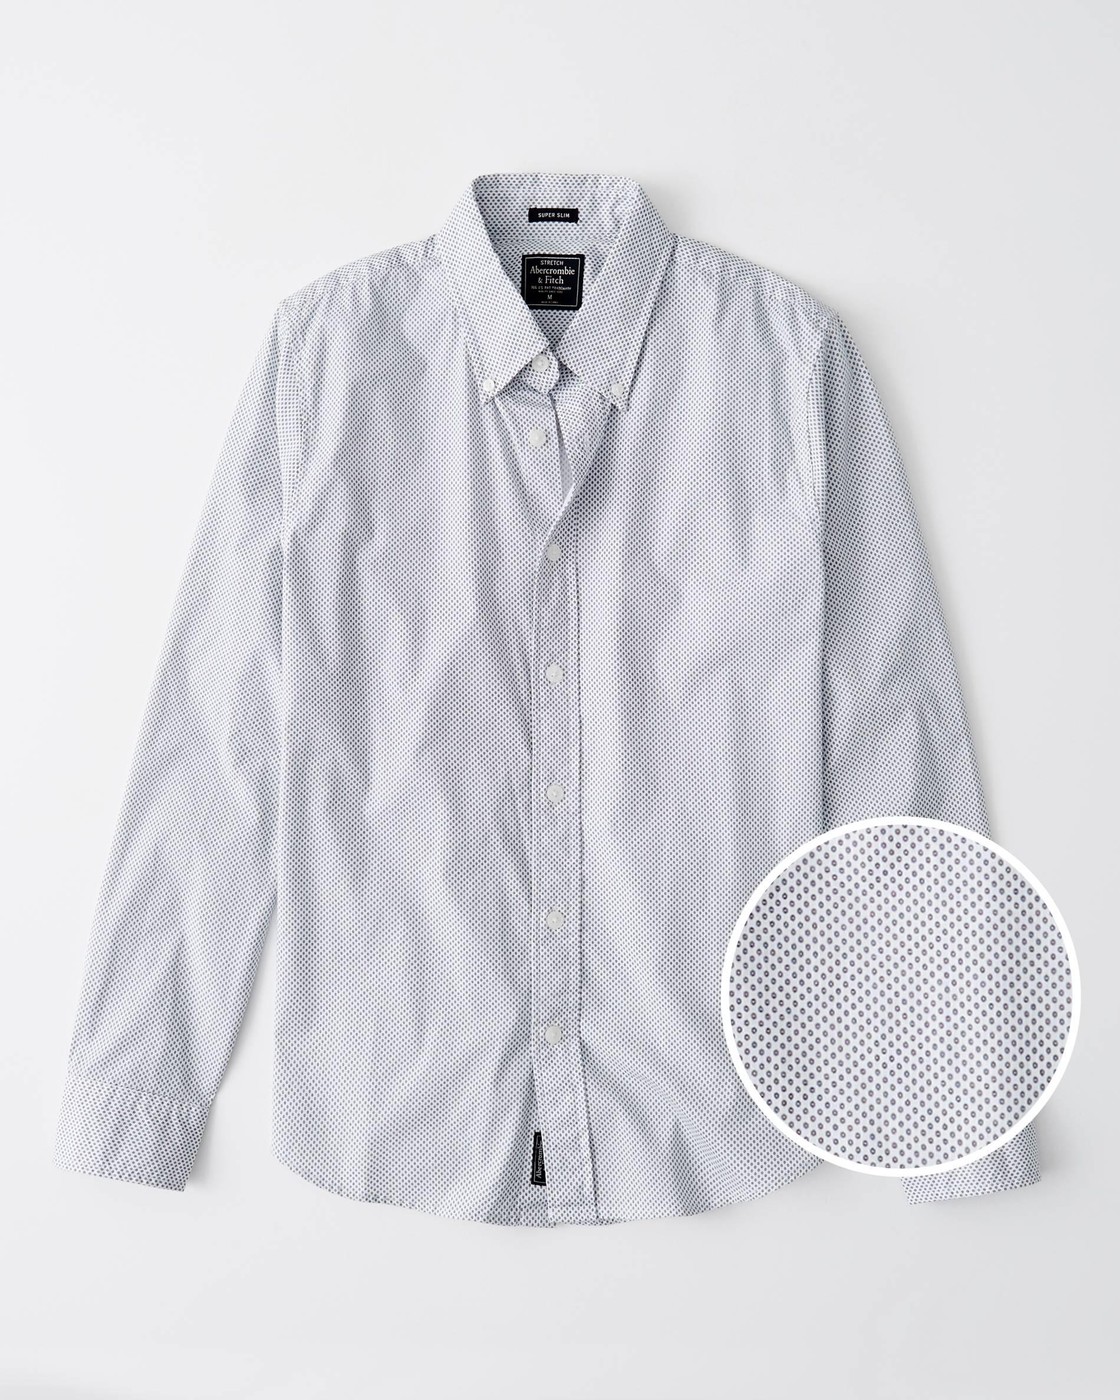 Мужская рубашка - рубашка Abercrombie & Fitch, L, L